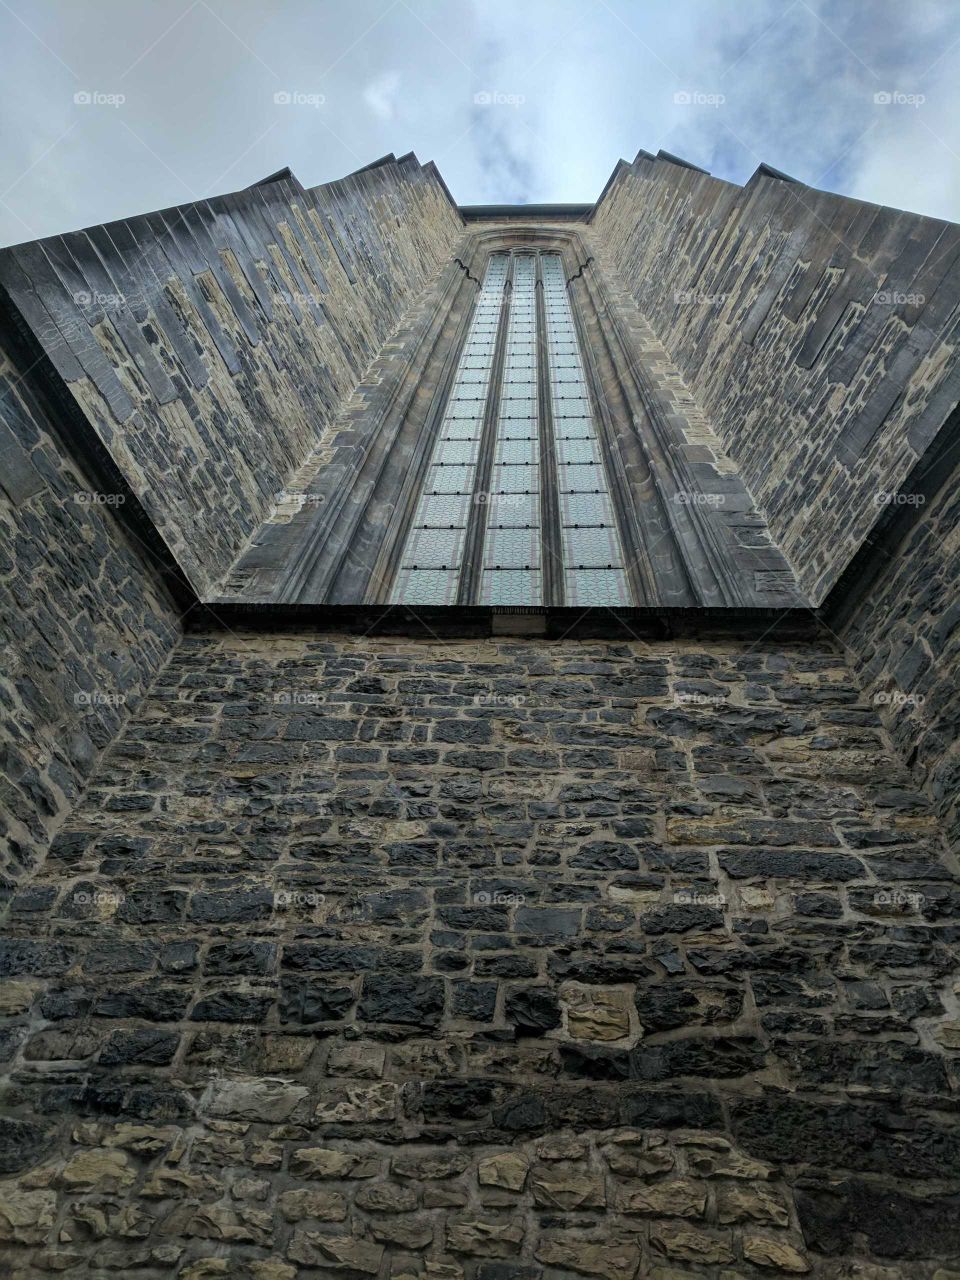 church windows